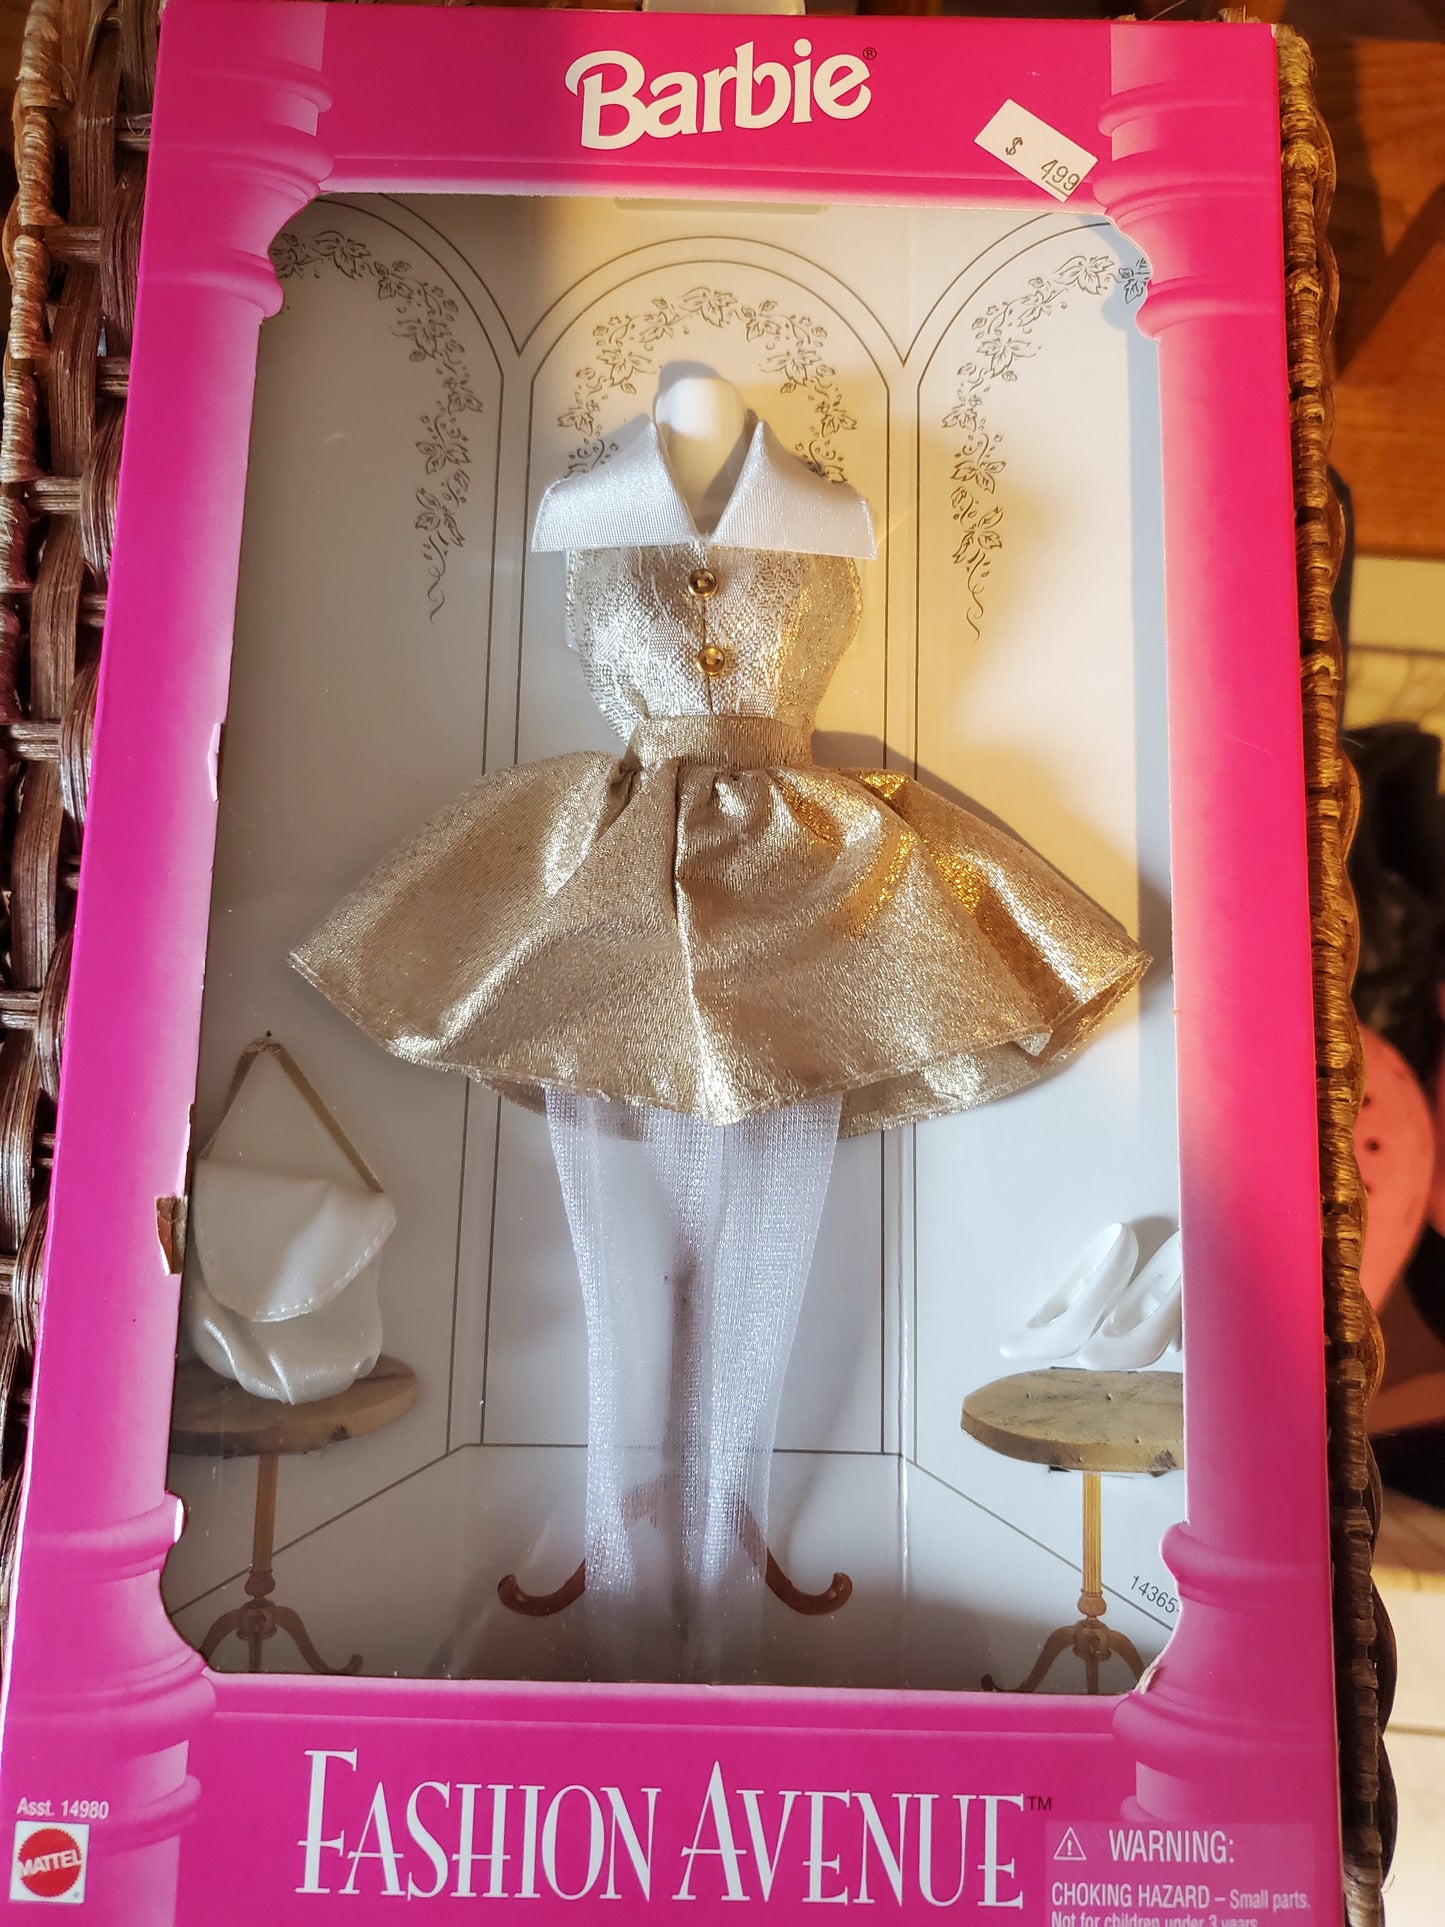 Fashion Avenue - Barbie - Gold Dress - Mint in Box - 1995